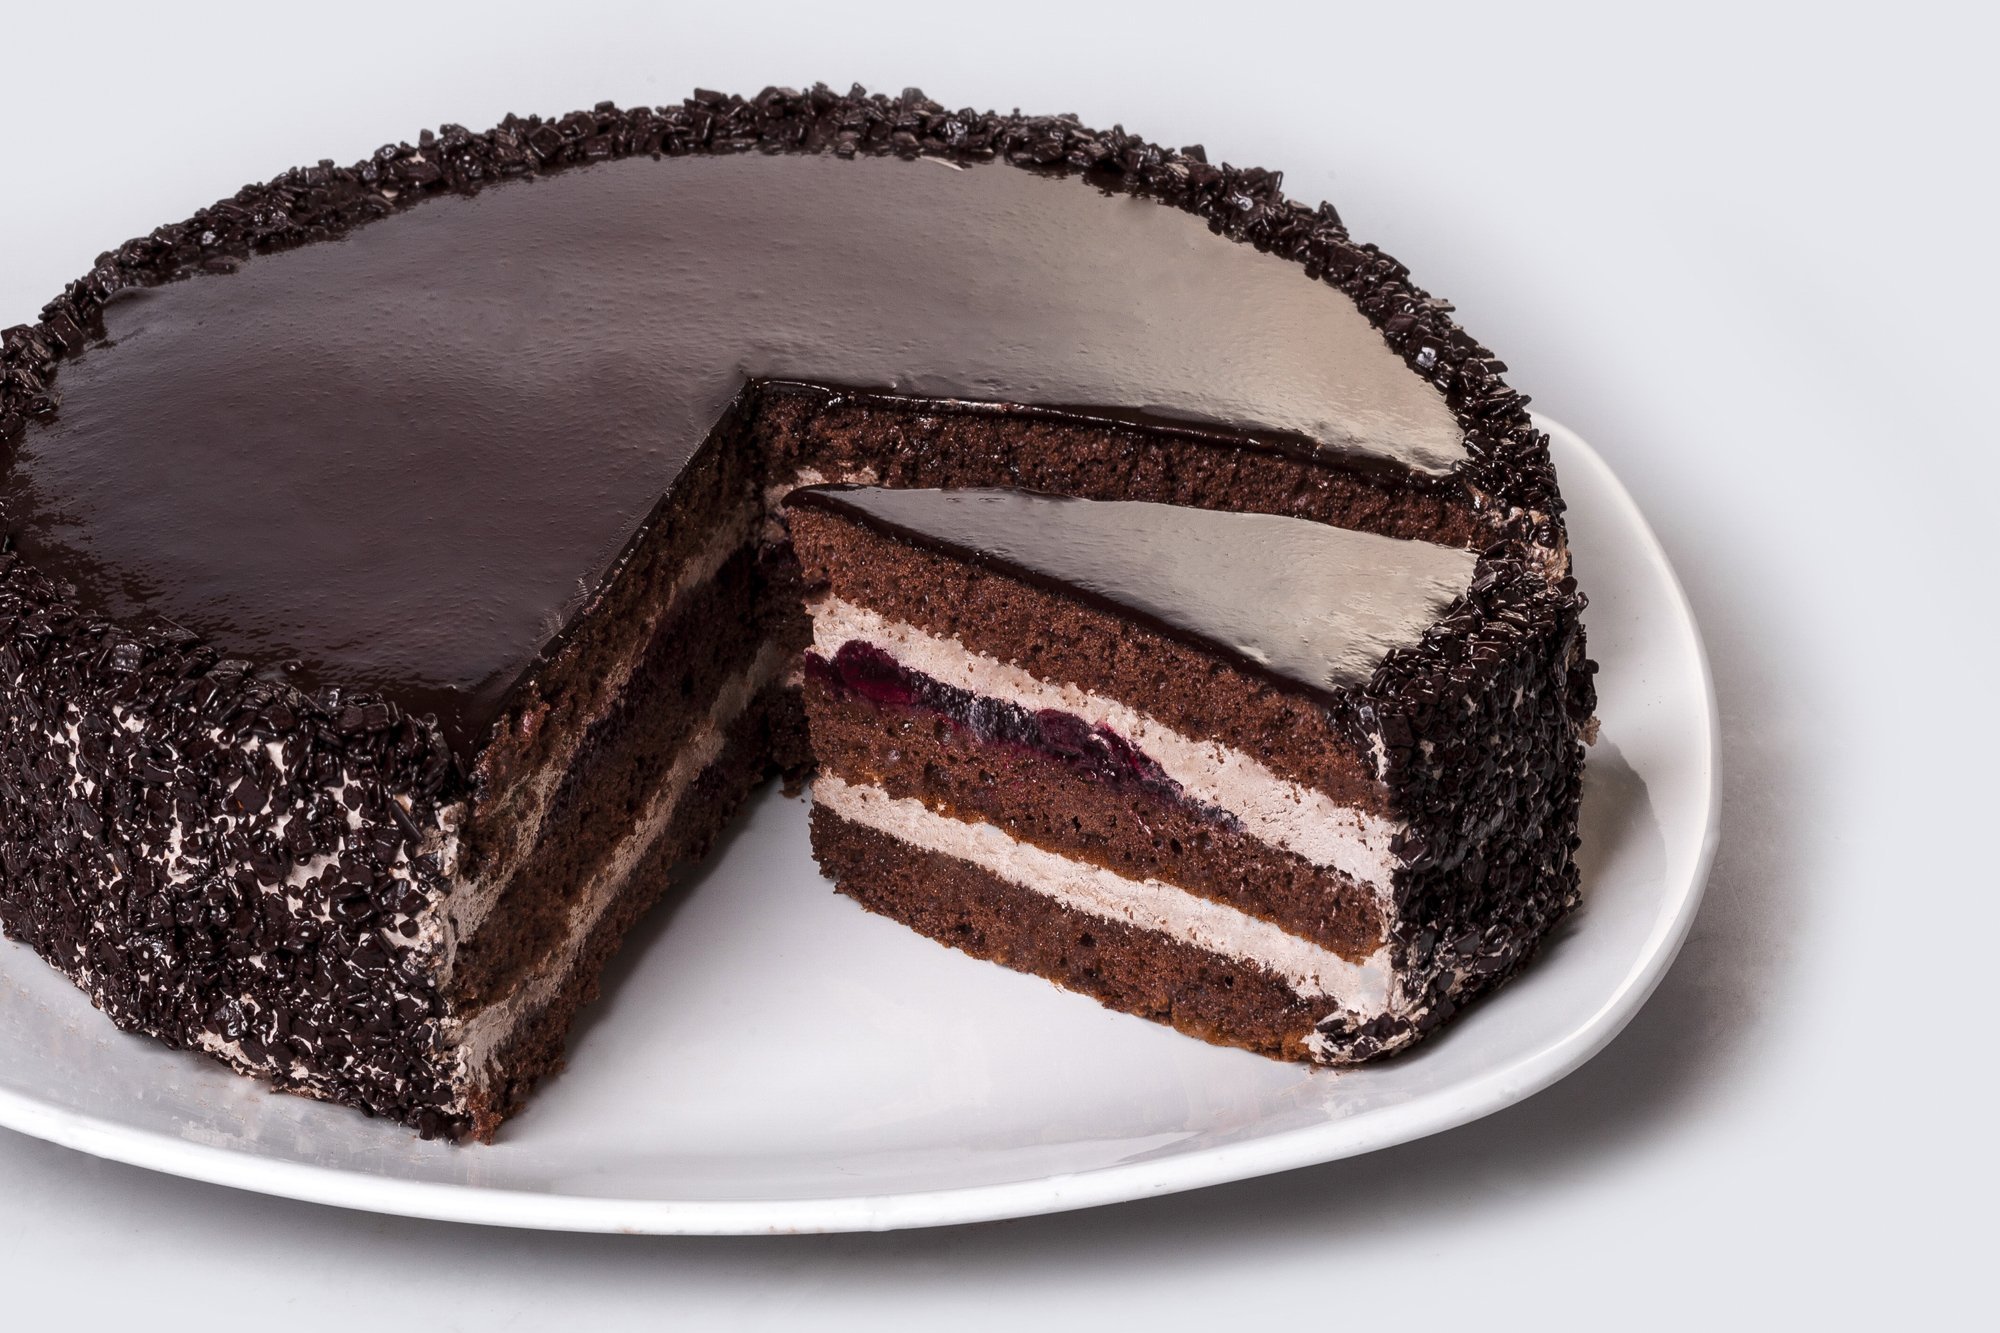 English cake. Бисквитный торт. Шоколадный бисквит. Шоколадный бисквитный торт. Бисквитный торт с шоколадным кремом.